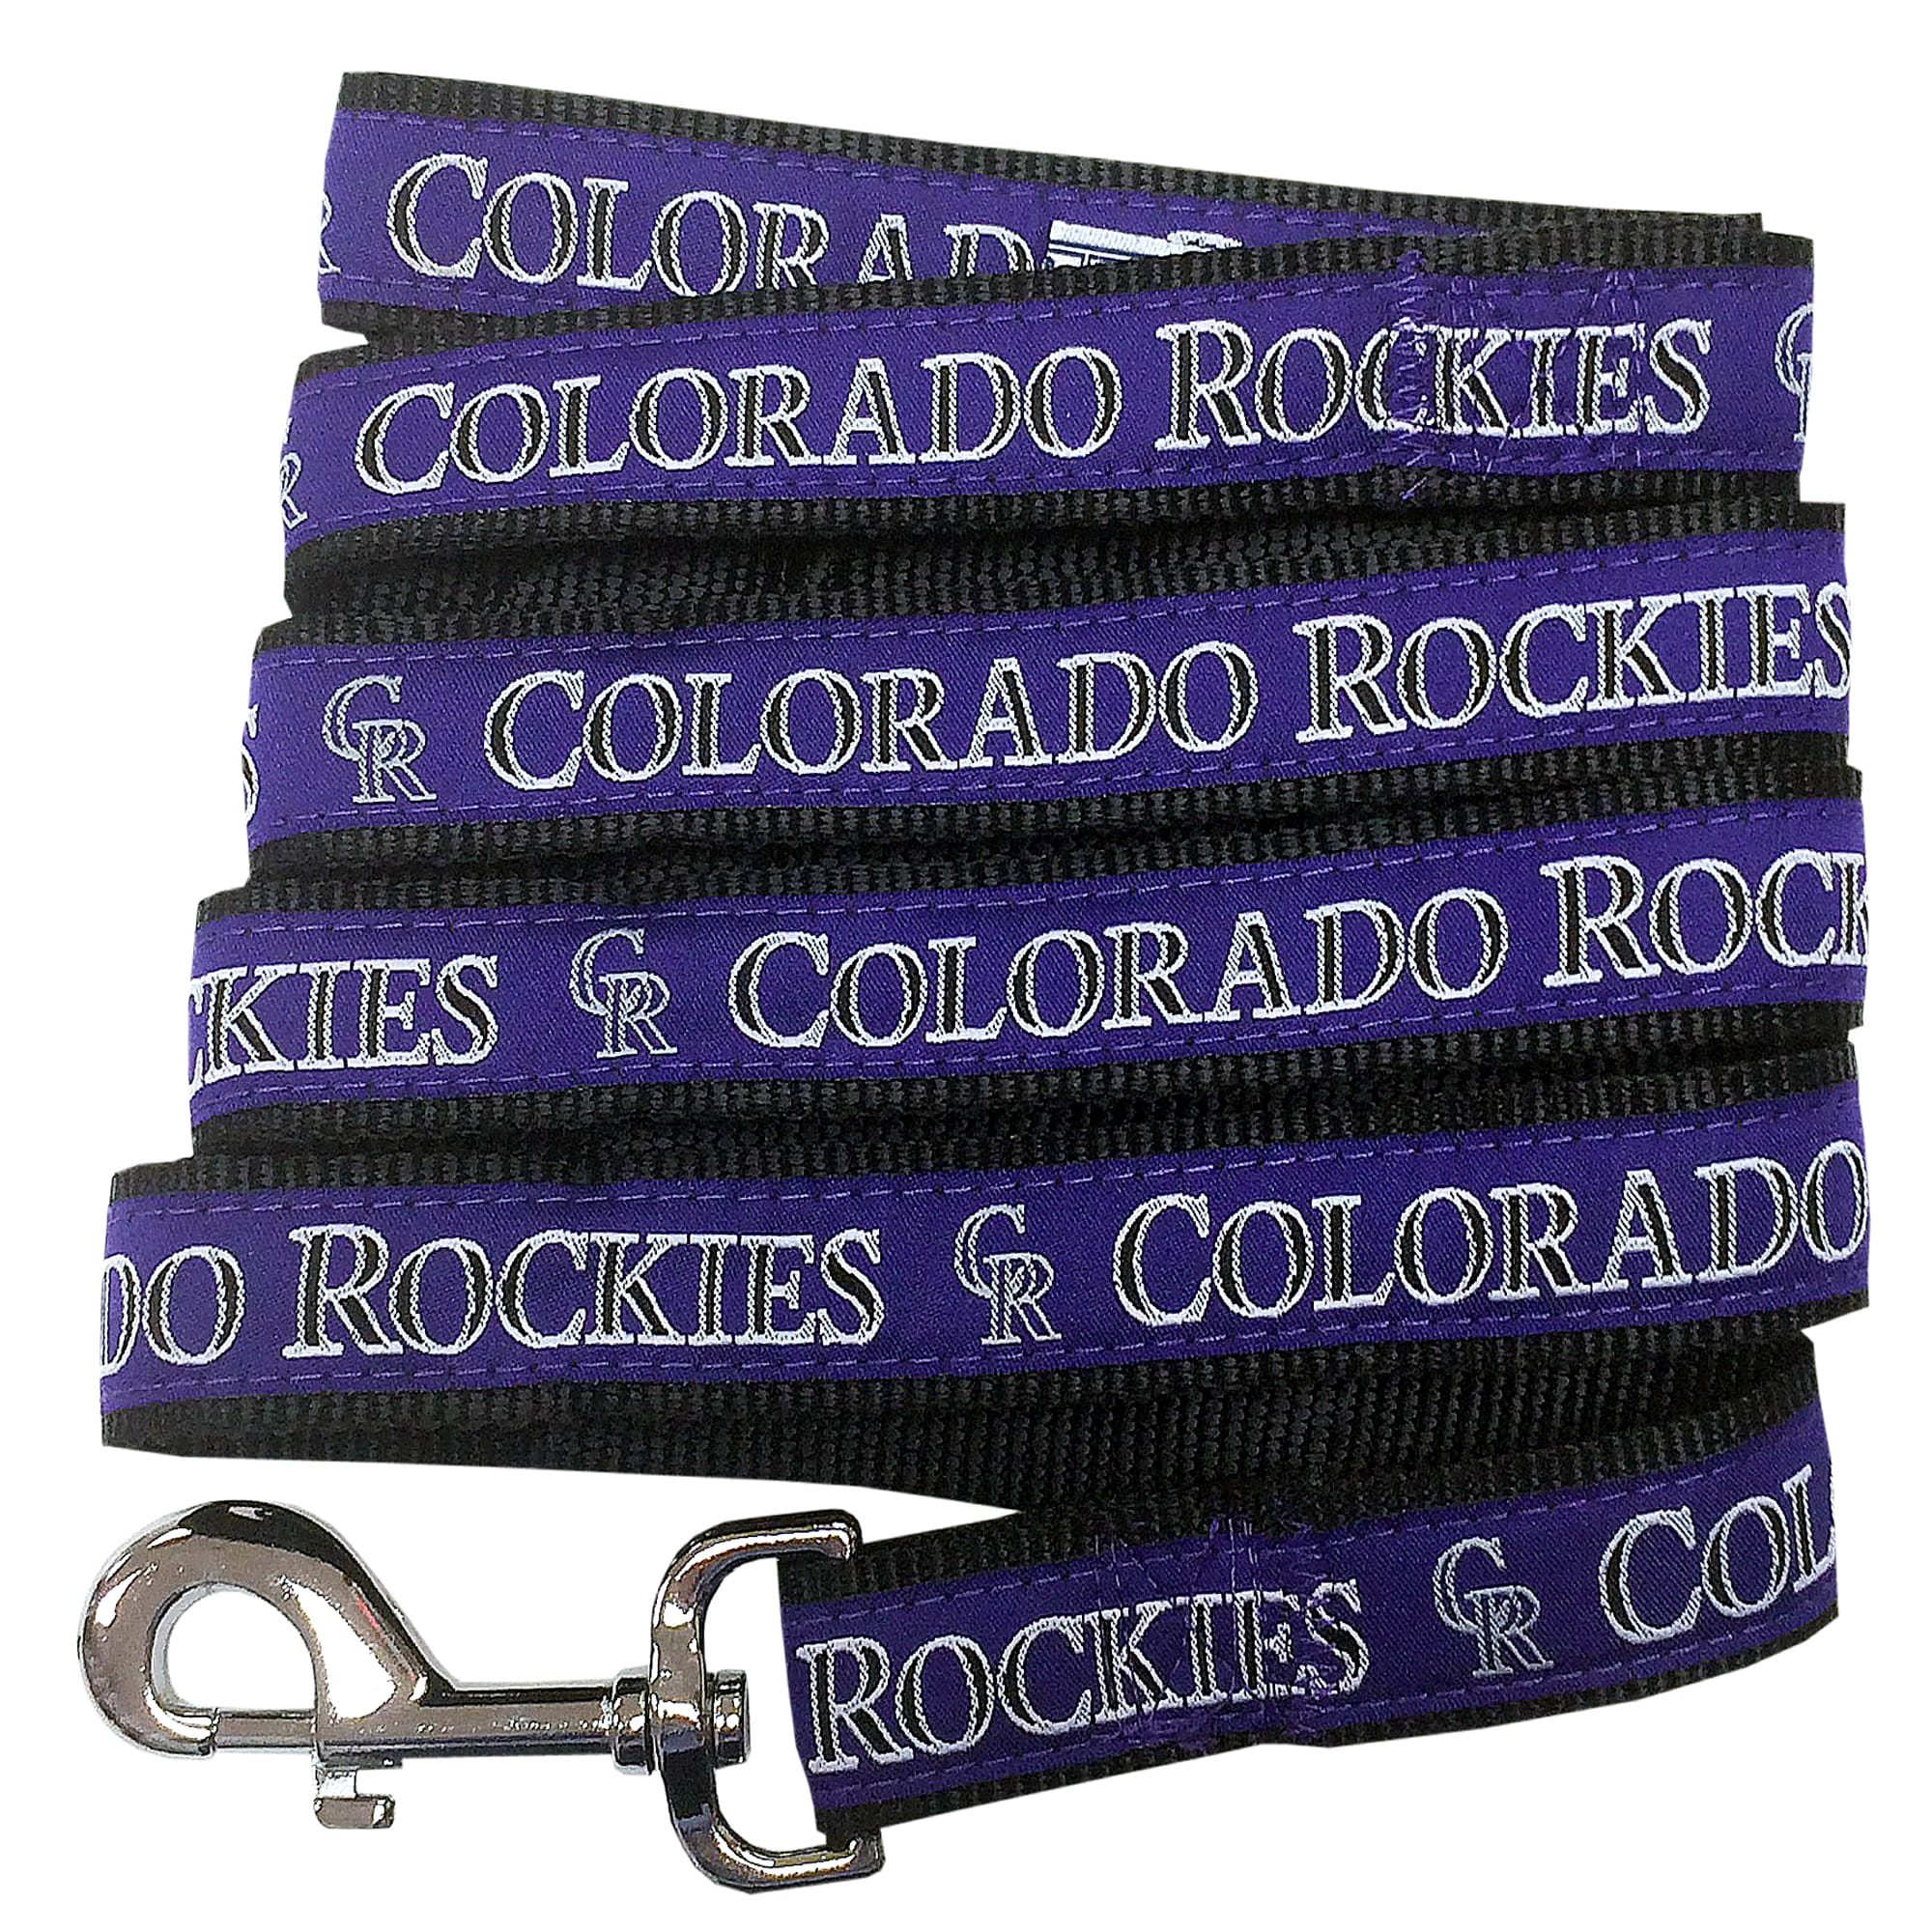 Colorado Rockies Licensed Cat or Dog Jersey 